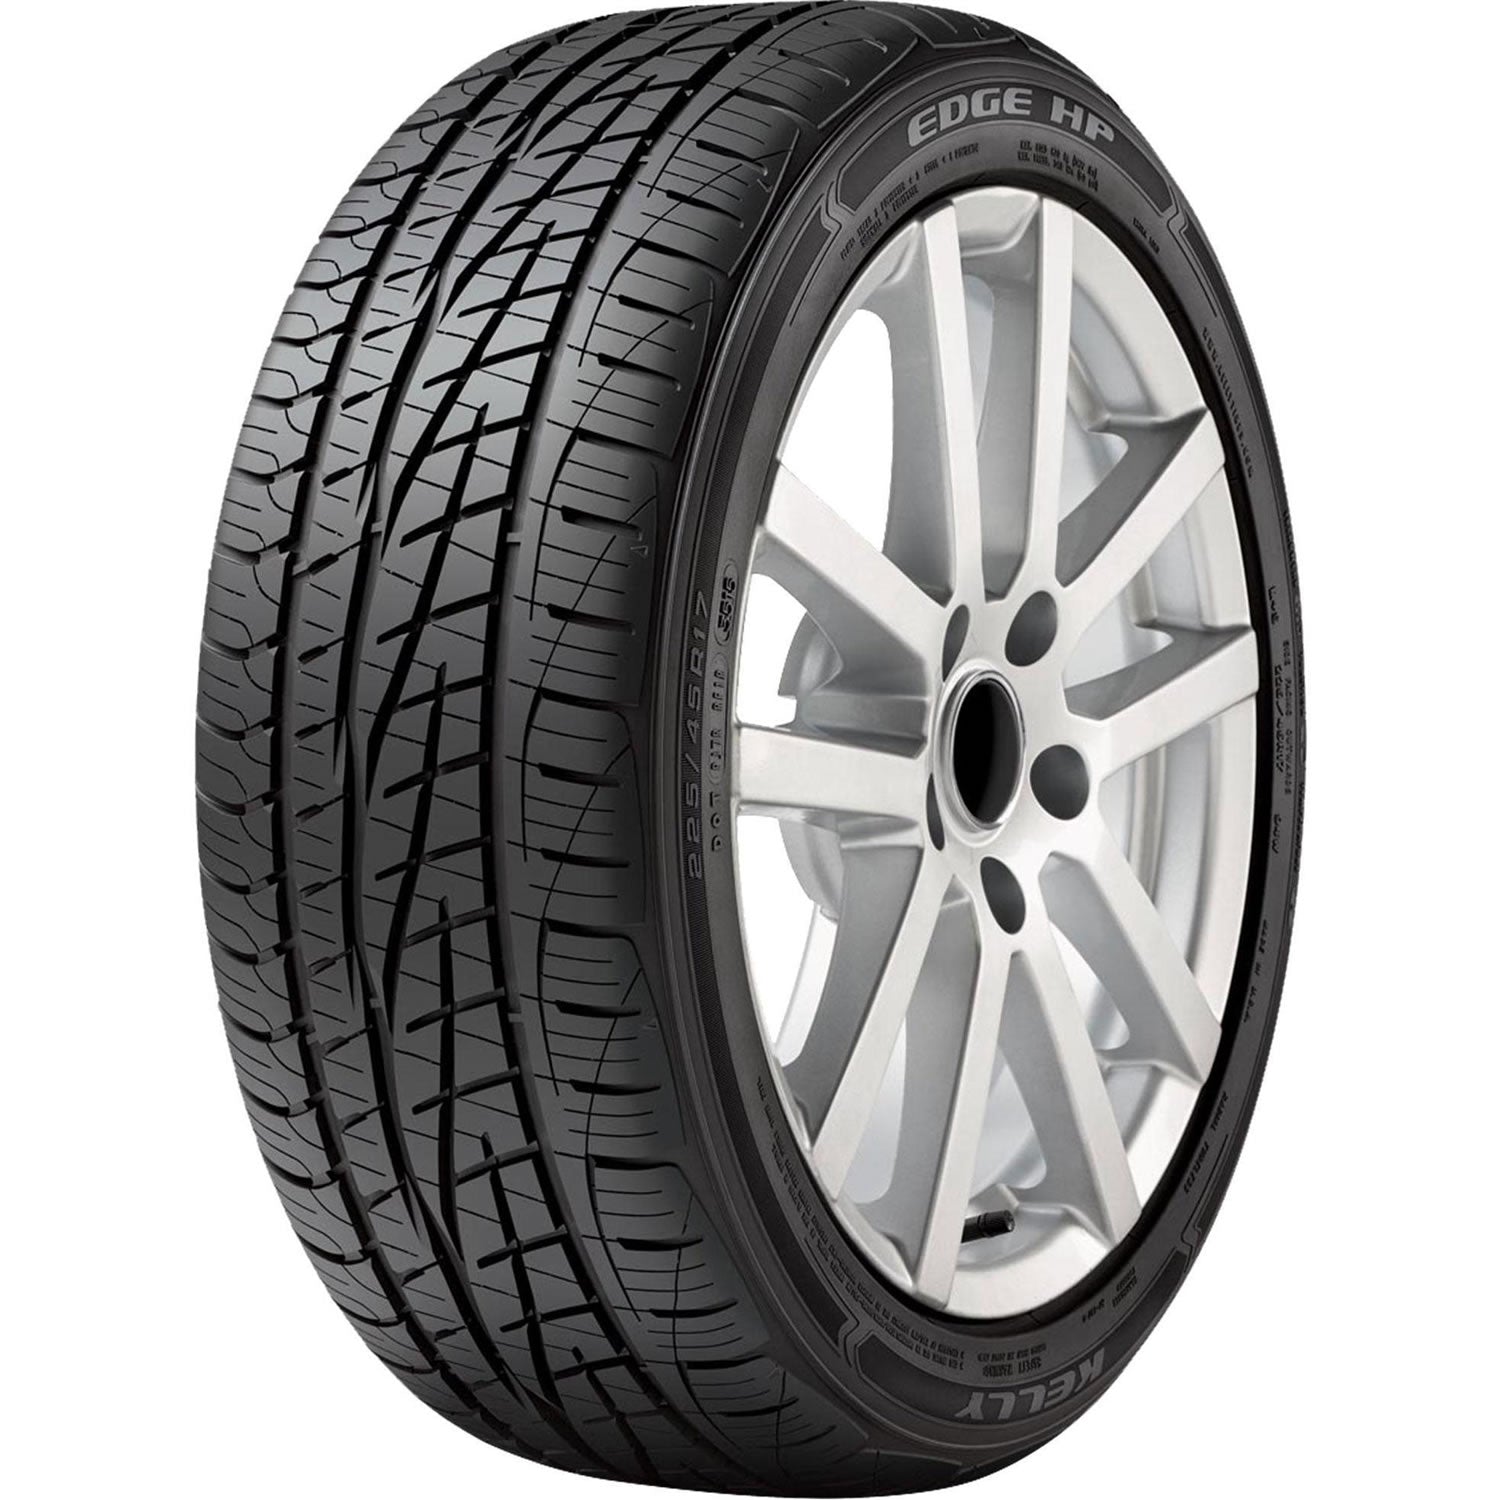 KELLY EDGE HP 225/50R16 (24.9X9.2R 16) Tires